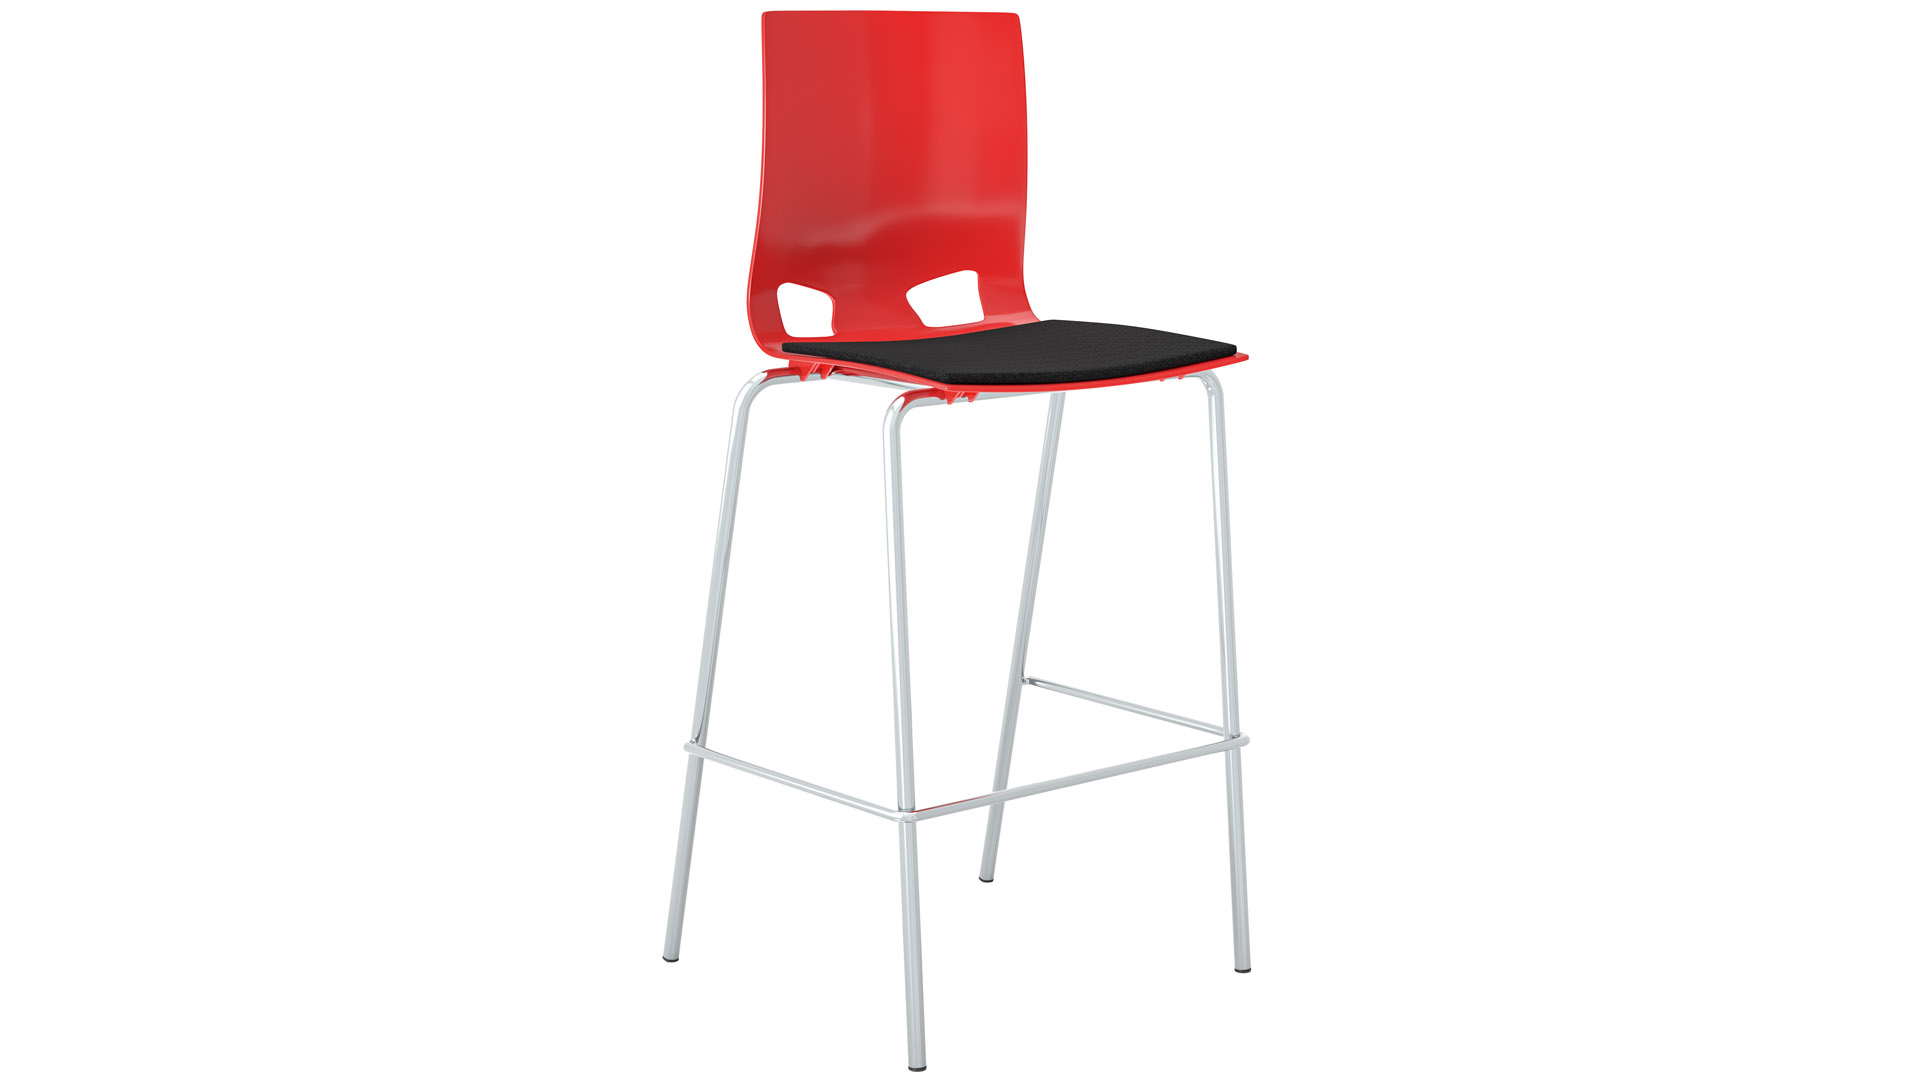 Barhocker mit Fußstütze, stapelbar, Gestell verchromt, Sitz Kunststoff, mit Polster, rot